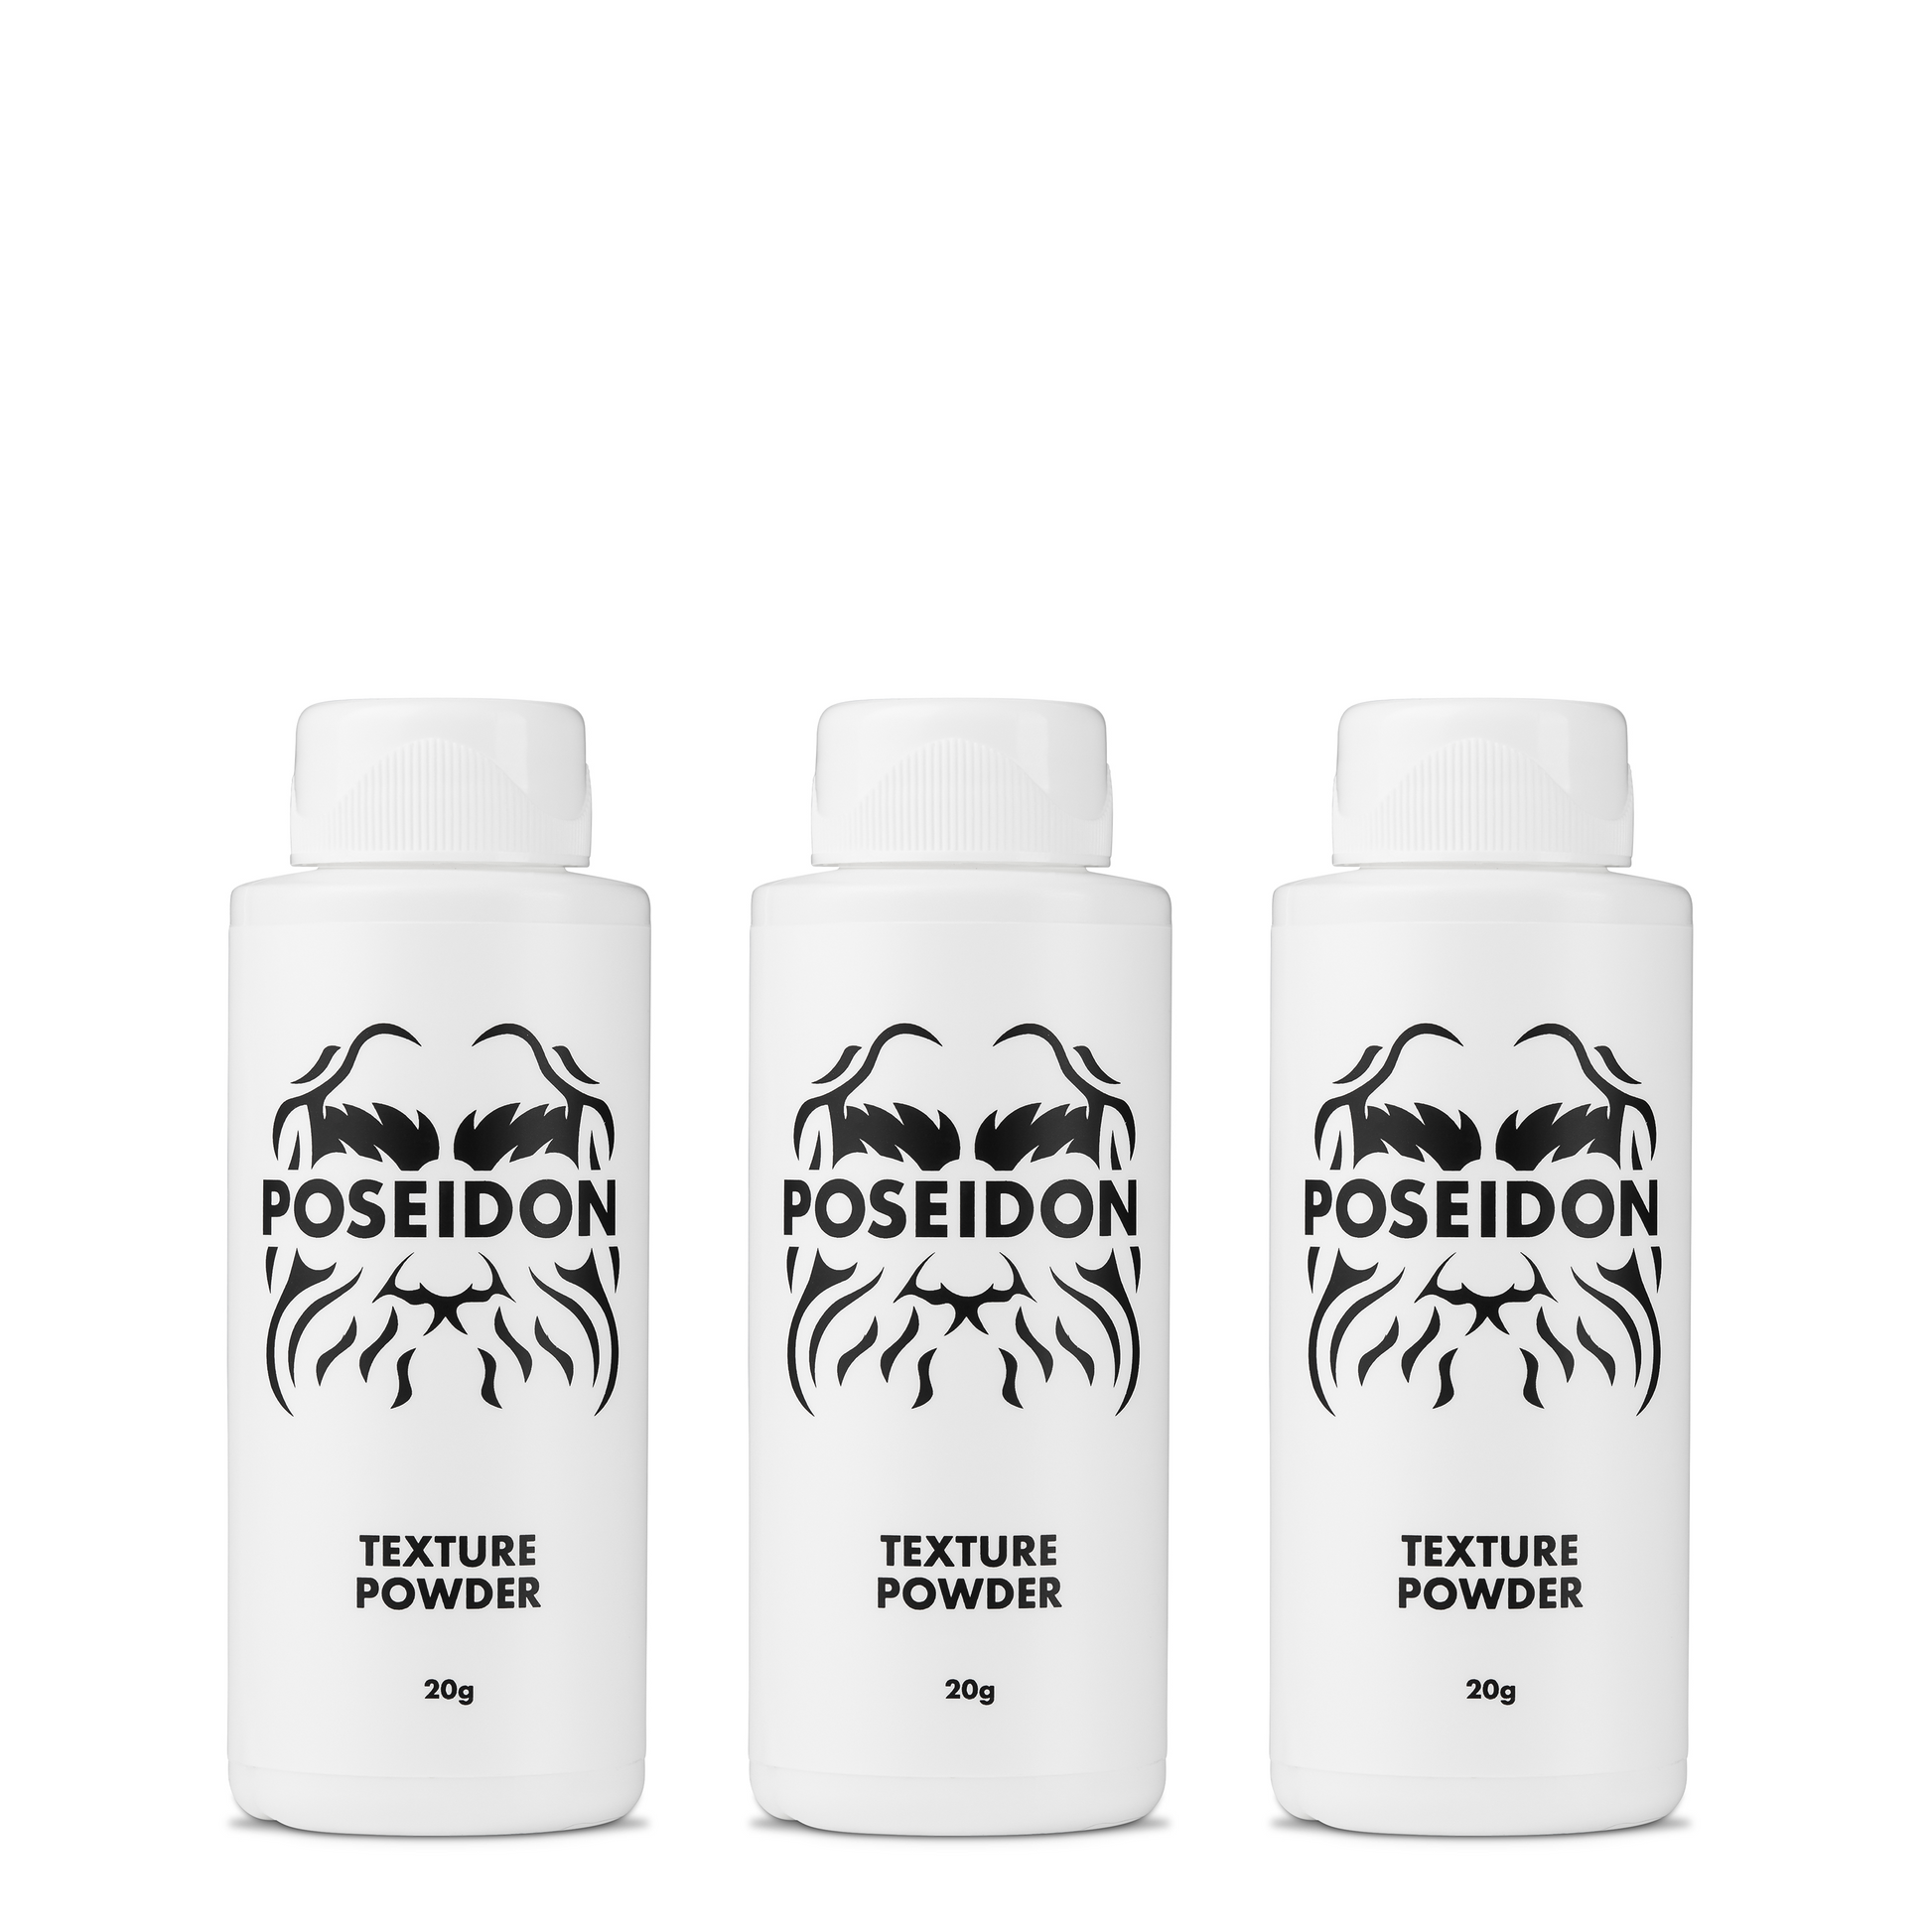 Poseidon Texture Powder - Instant volume boost for gravity-defying looks.